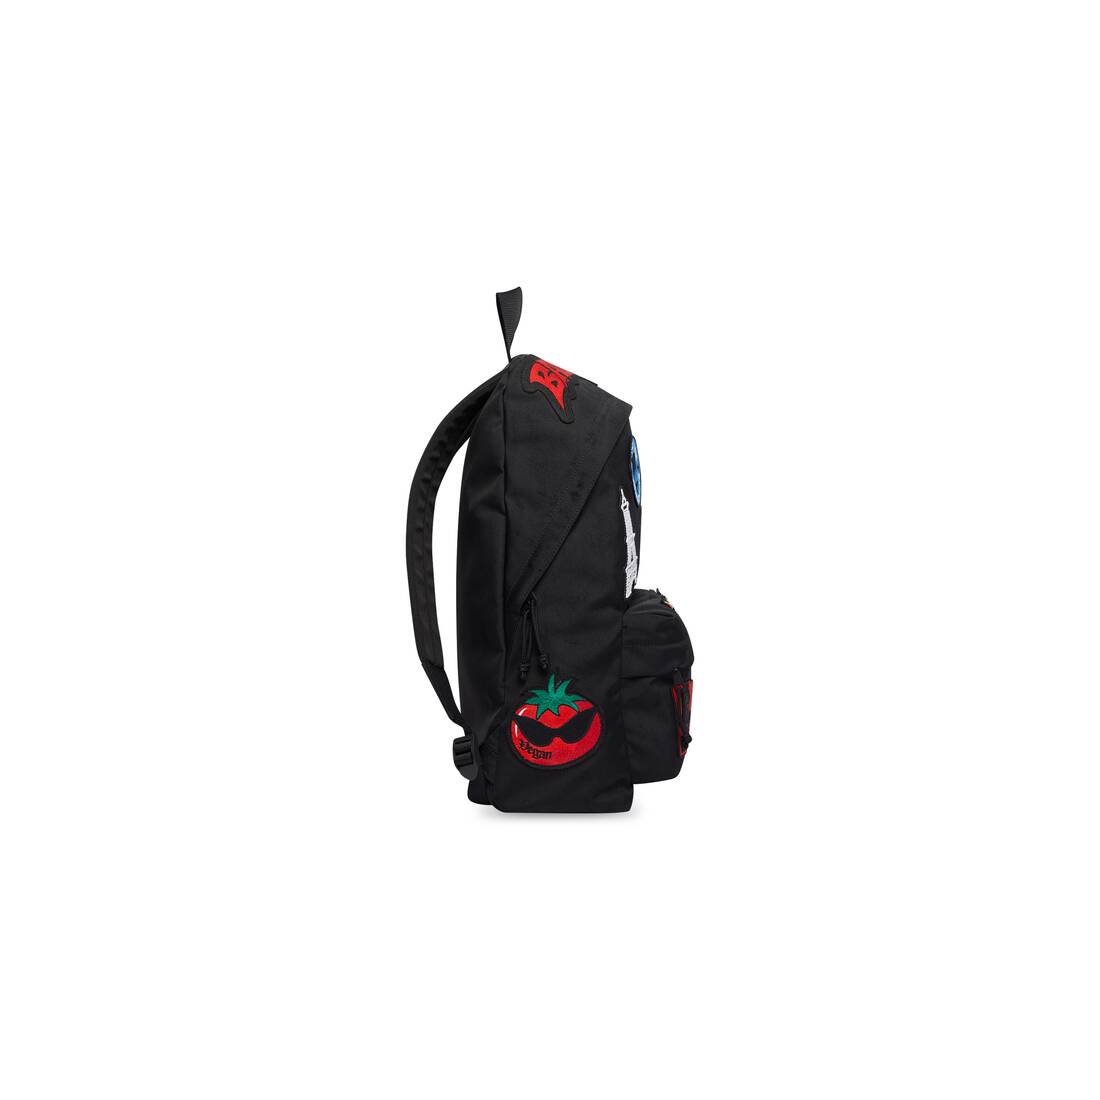 Men's Explorer Backpack in Black